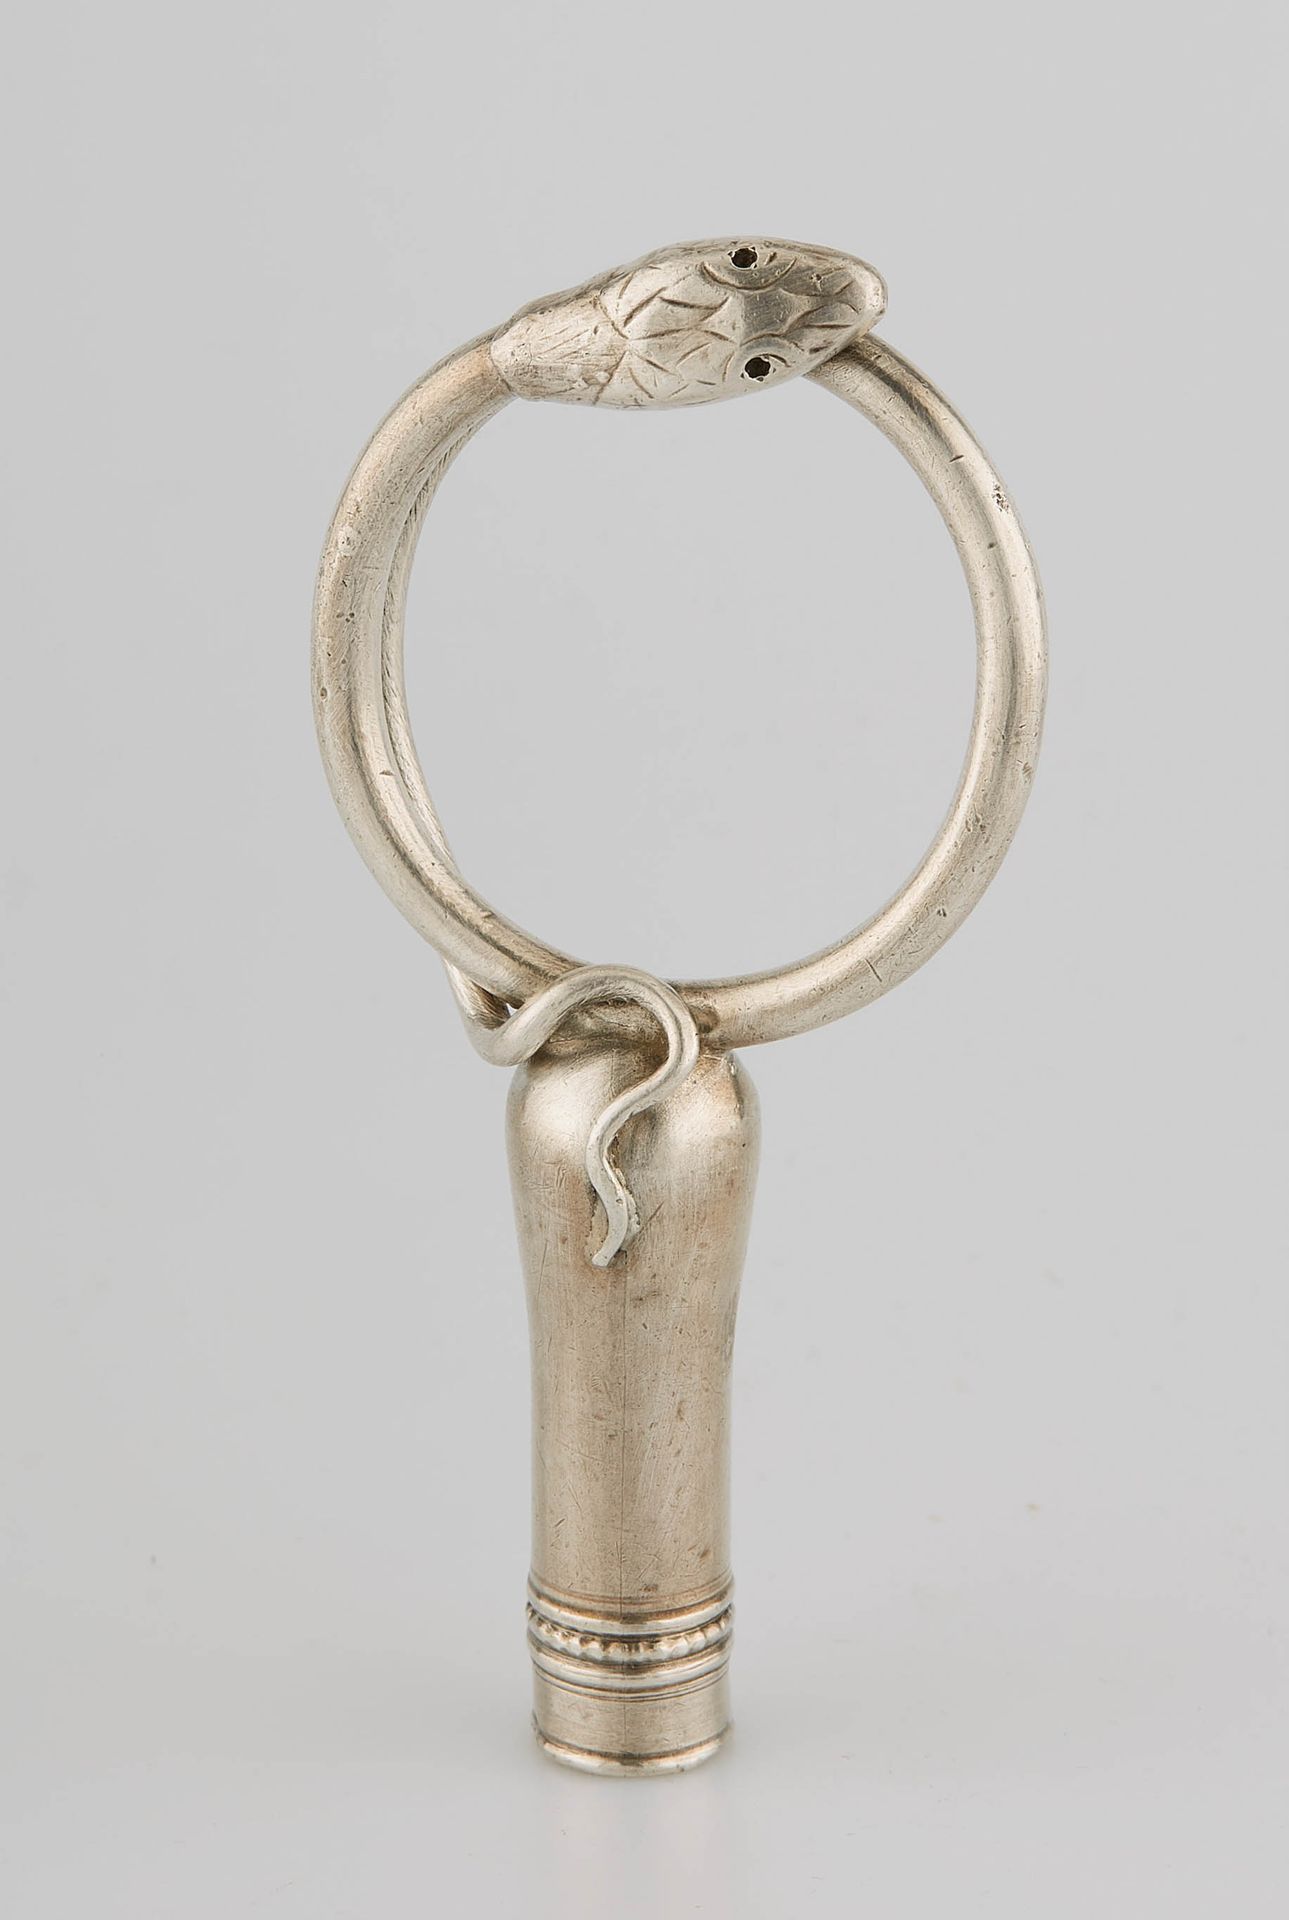 Null 
一根镀银的手杖或阳伞柄，握柄处有一条蛇，环状物可作为手套架。19世纪。9,5 x 4,5厘米。